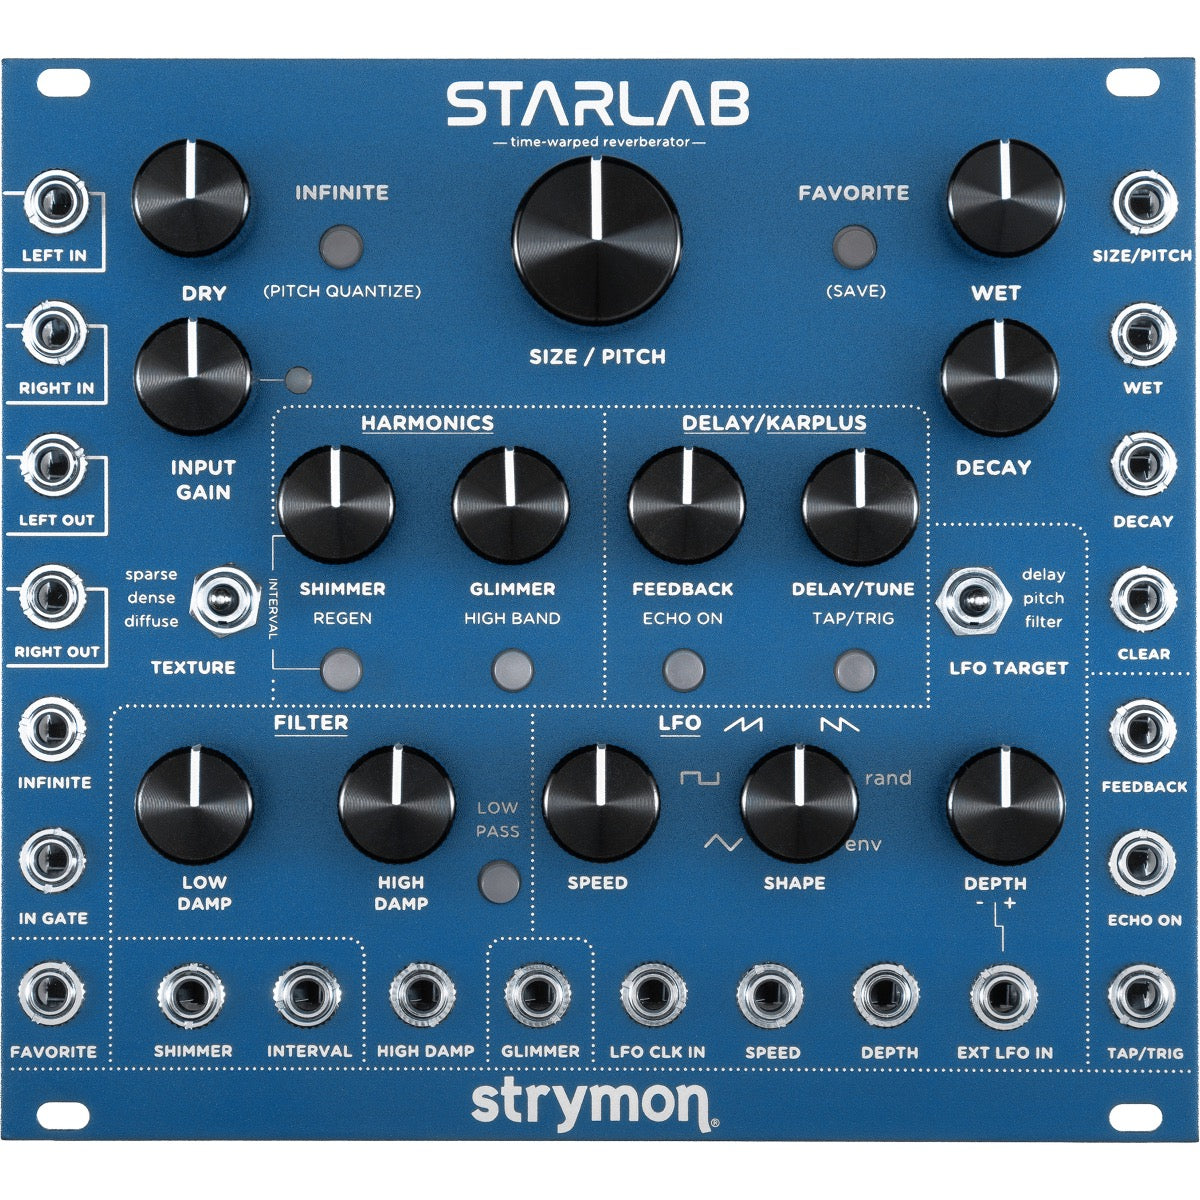 Strymon StarLab Time-Warped Reverberator Effects Module View 1